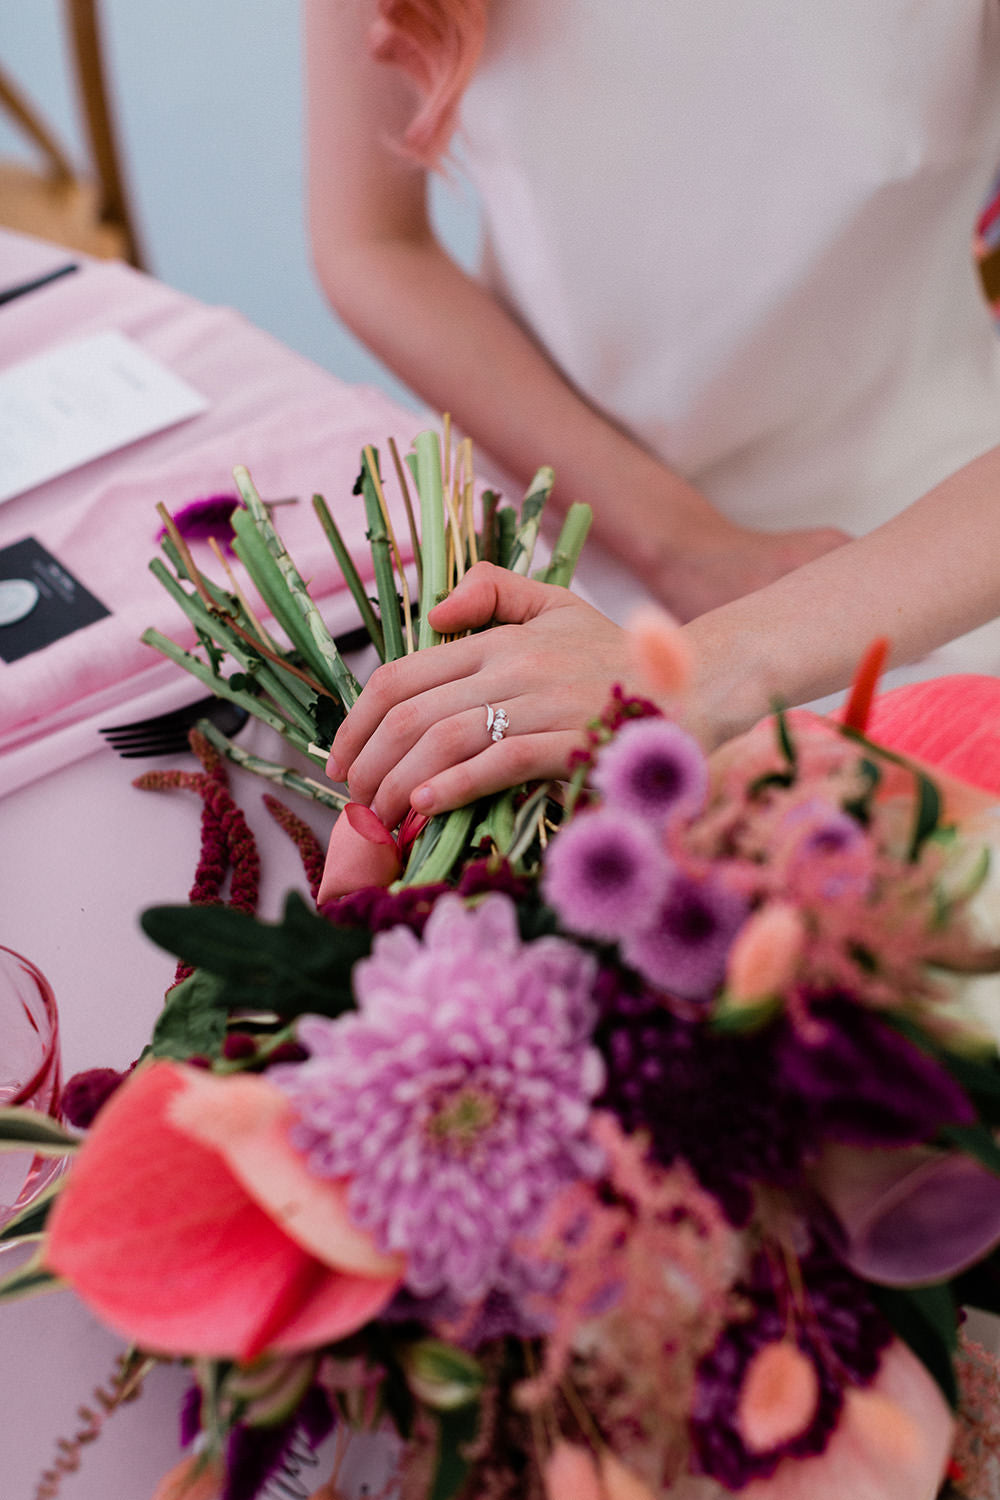 Unusual diamond twist wedding ring amongst floral bouquet